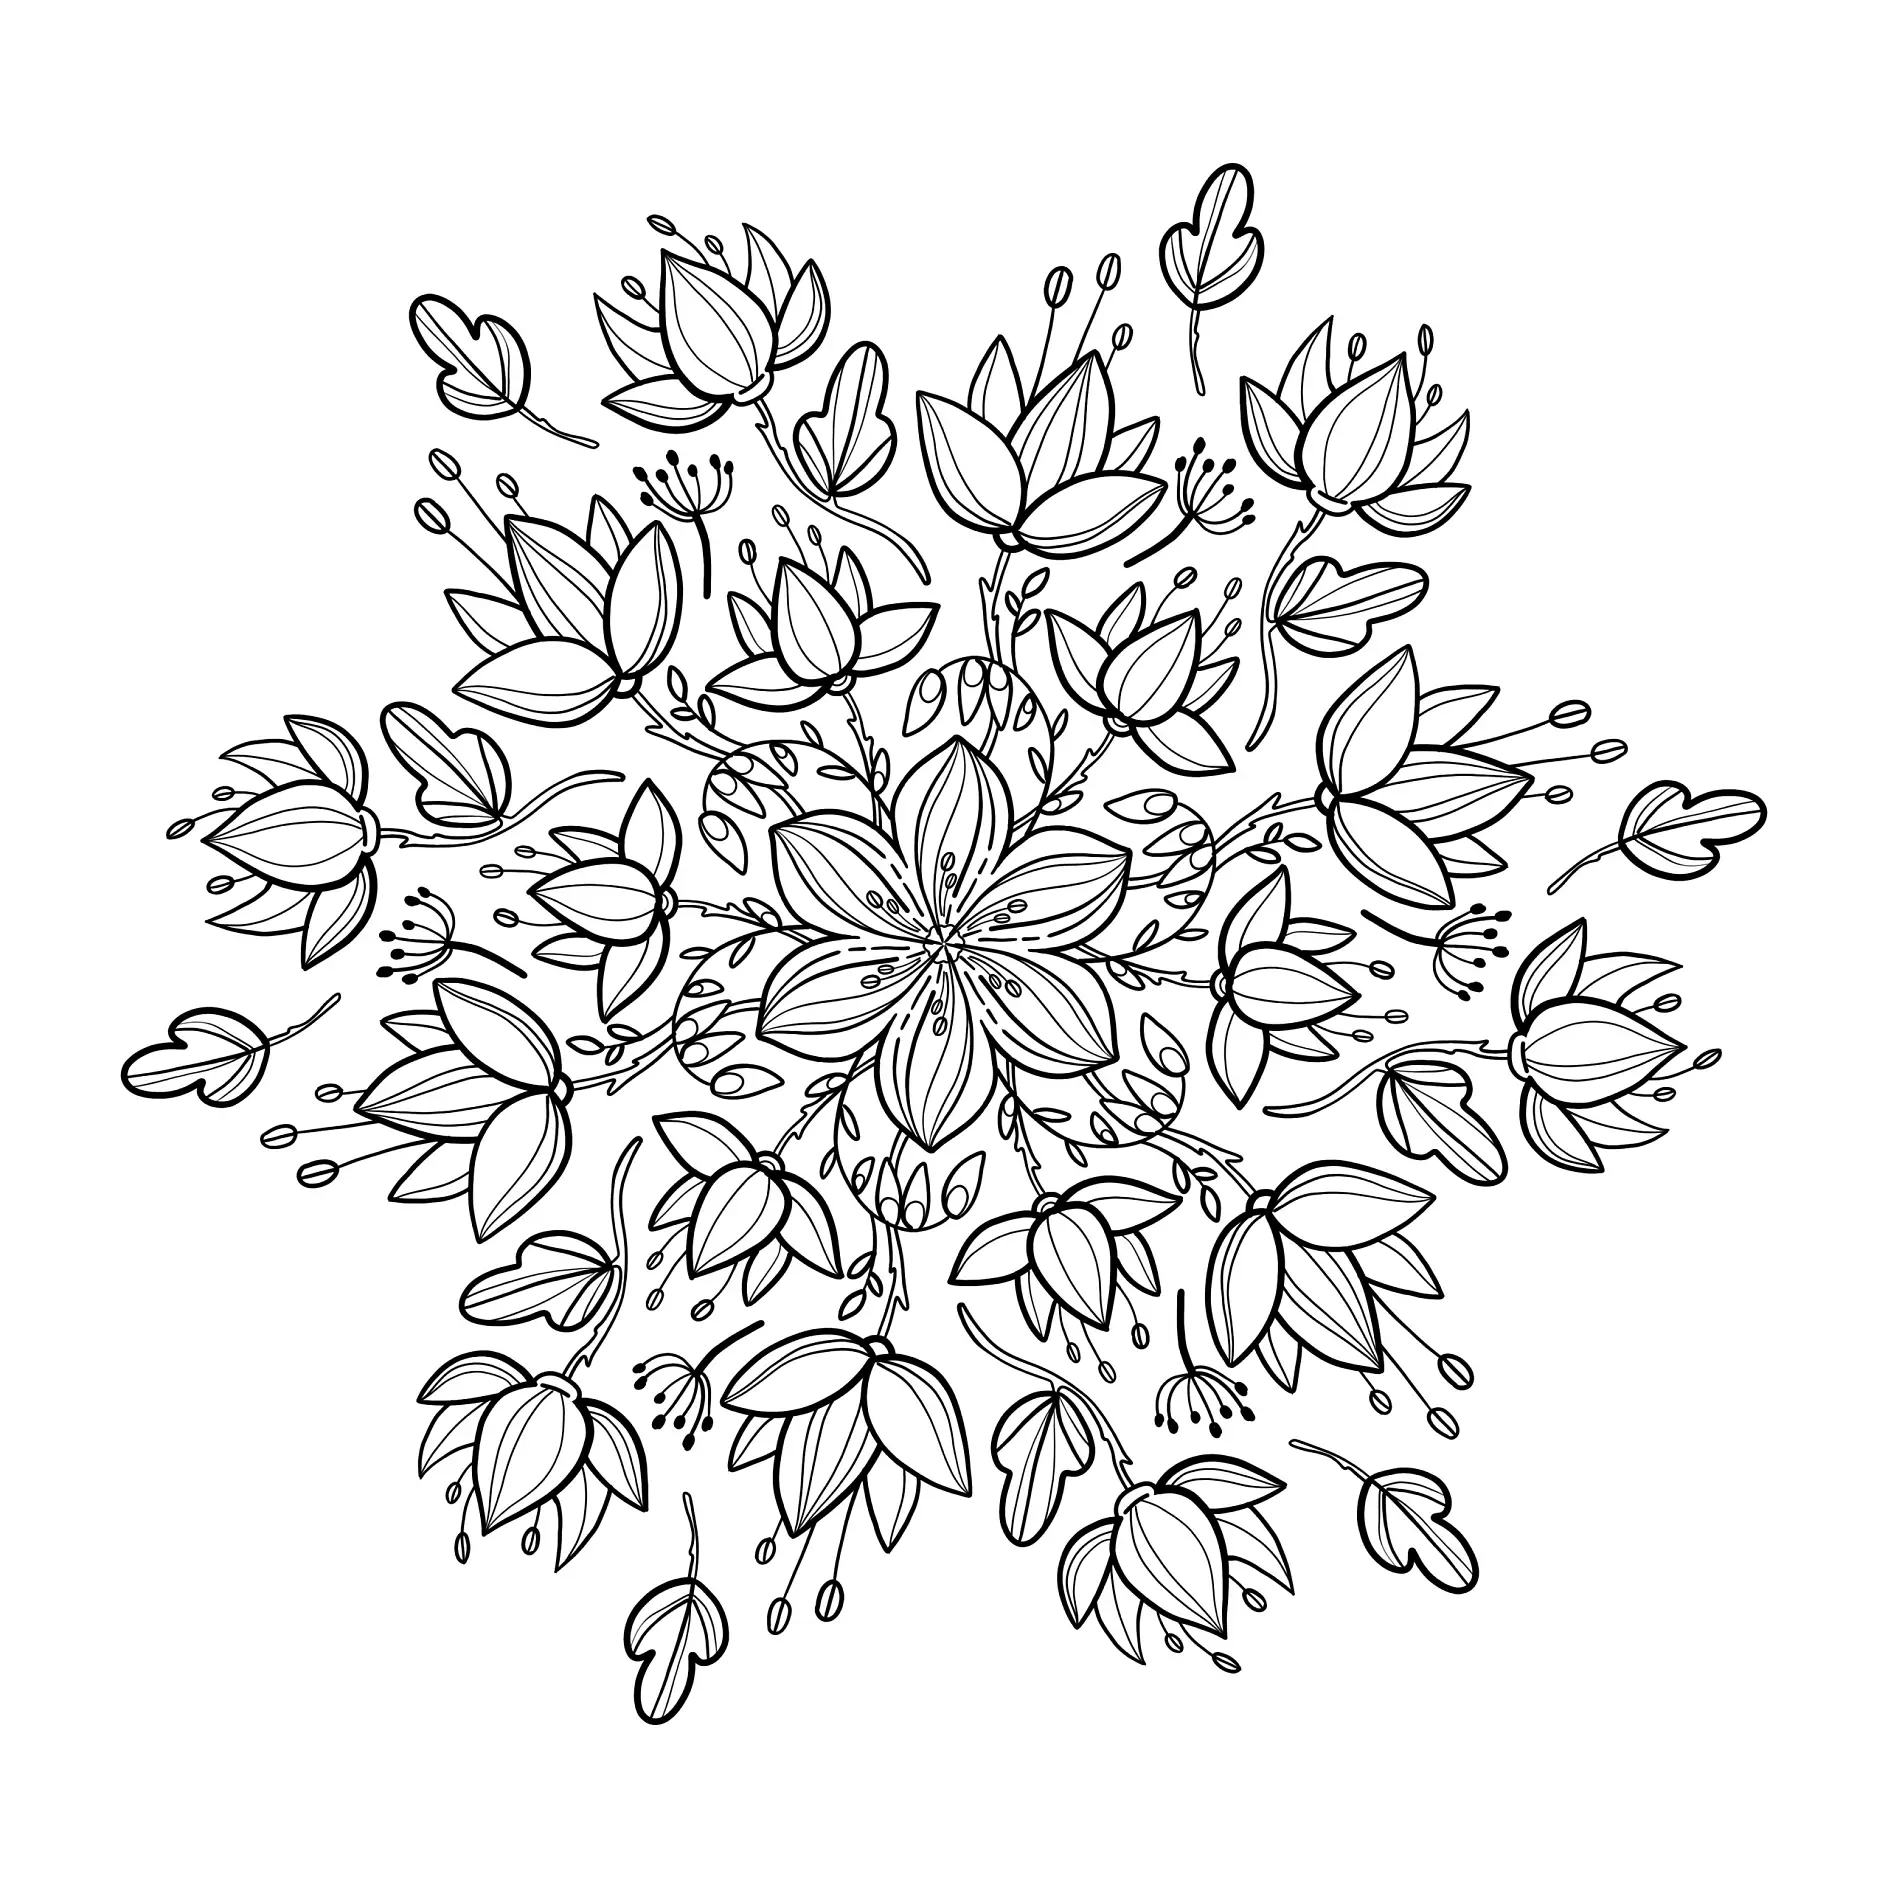 Ausmalbild Mandala Blumenmuster mit Blüten und Blättern